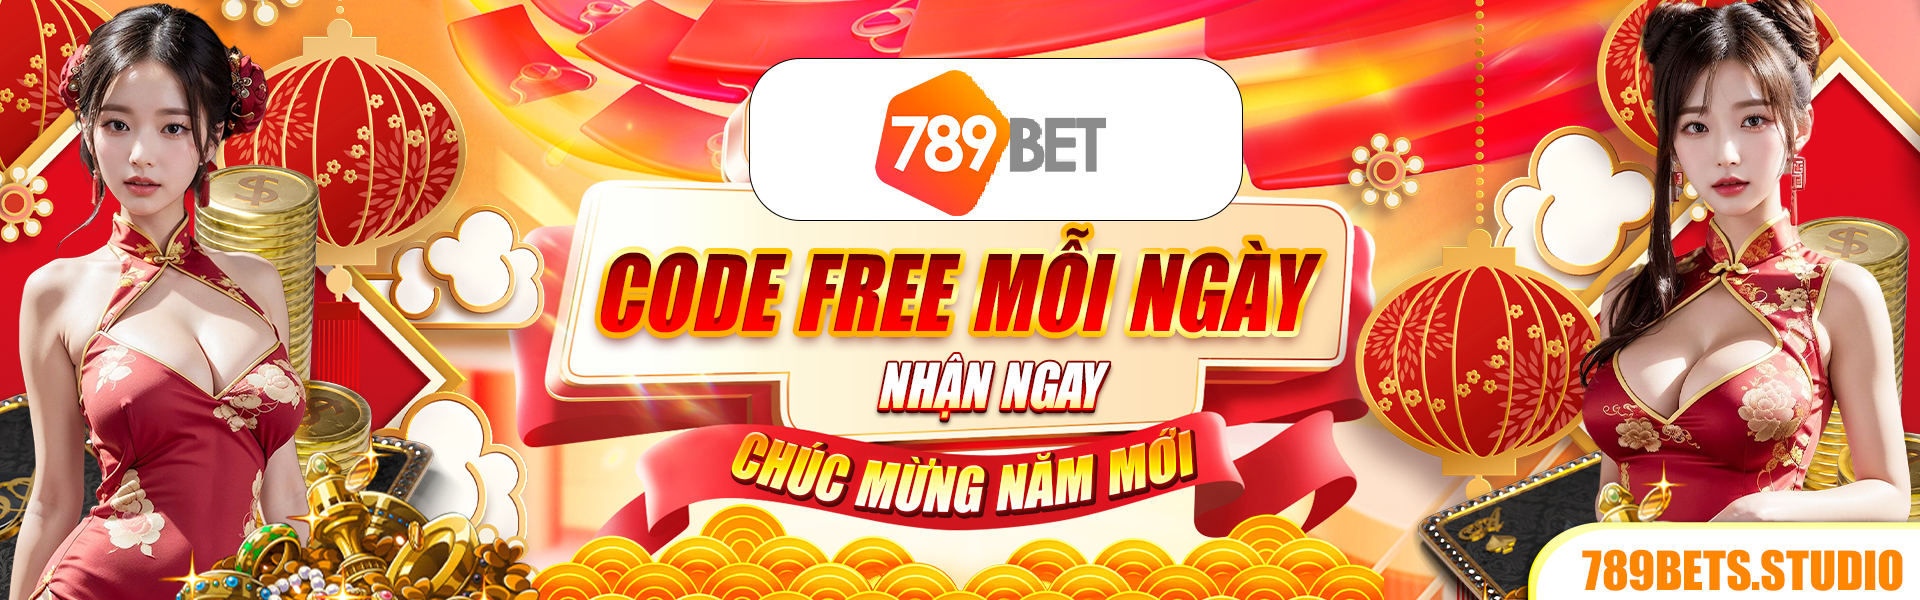 2-code-free-moi-ngay-chuc-mung-nam-moi- (1)